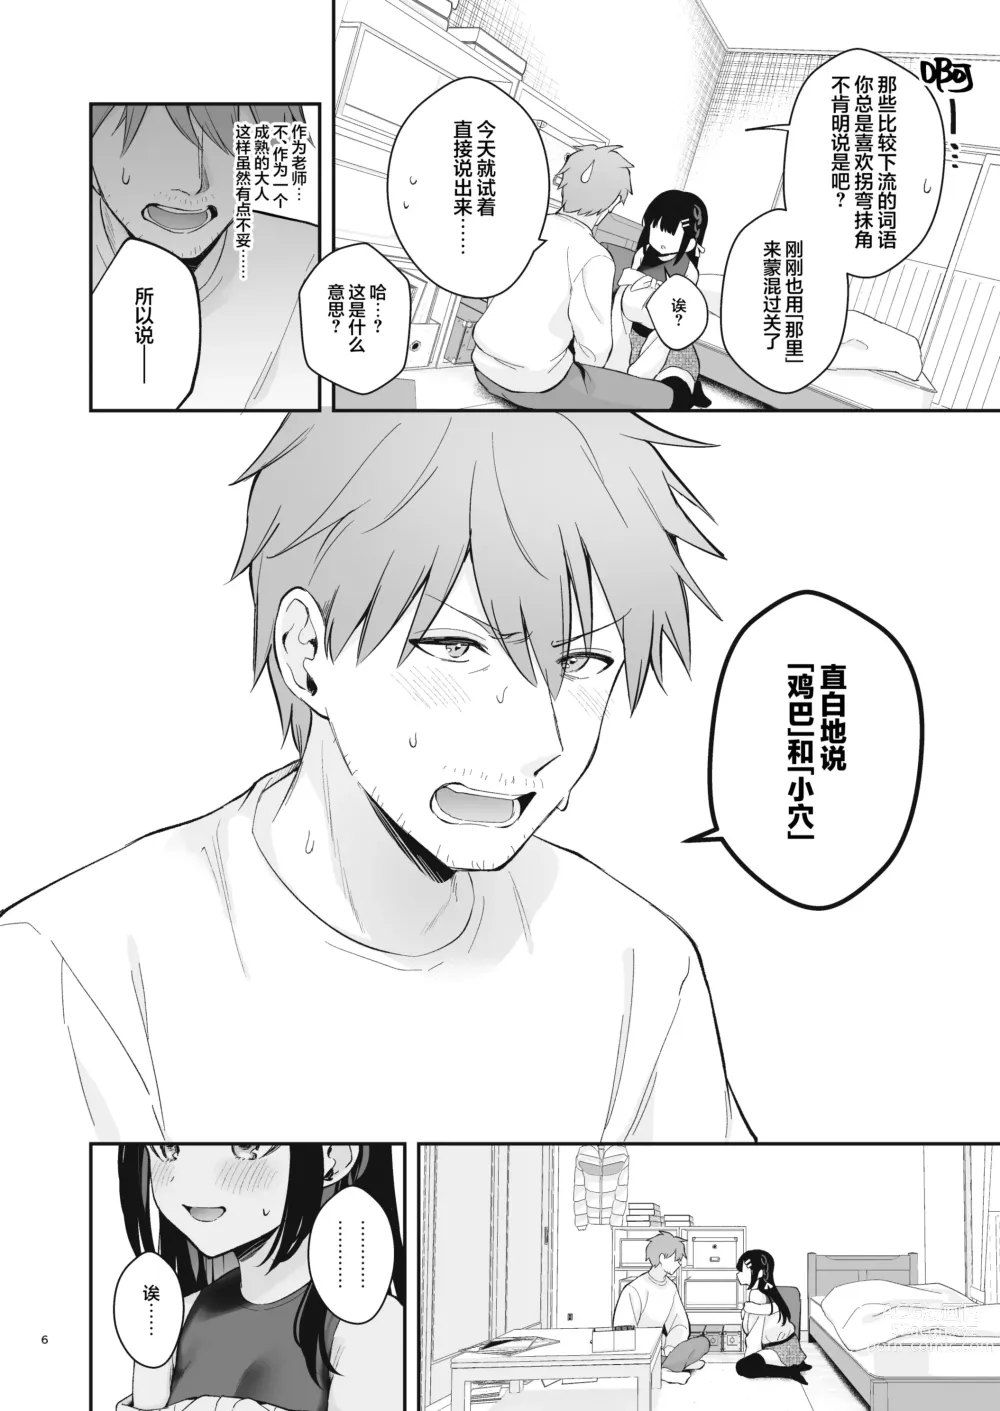 Page 7 of doujinshi 脸红心跳惩罚游戏